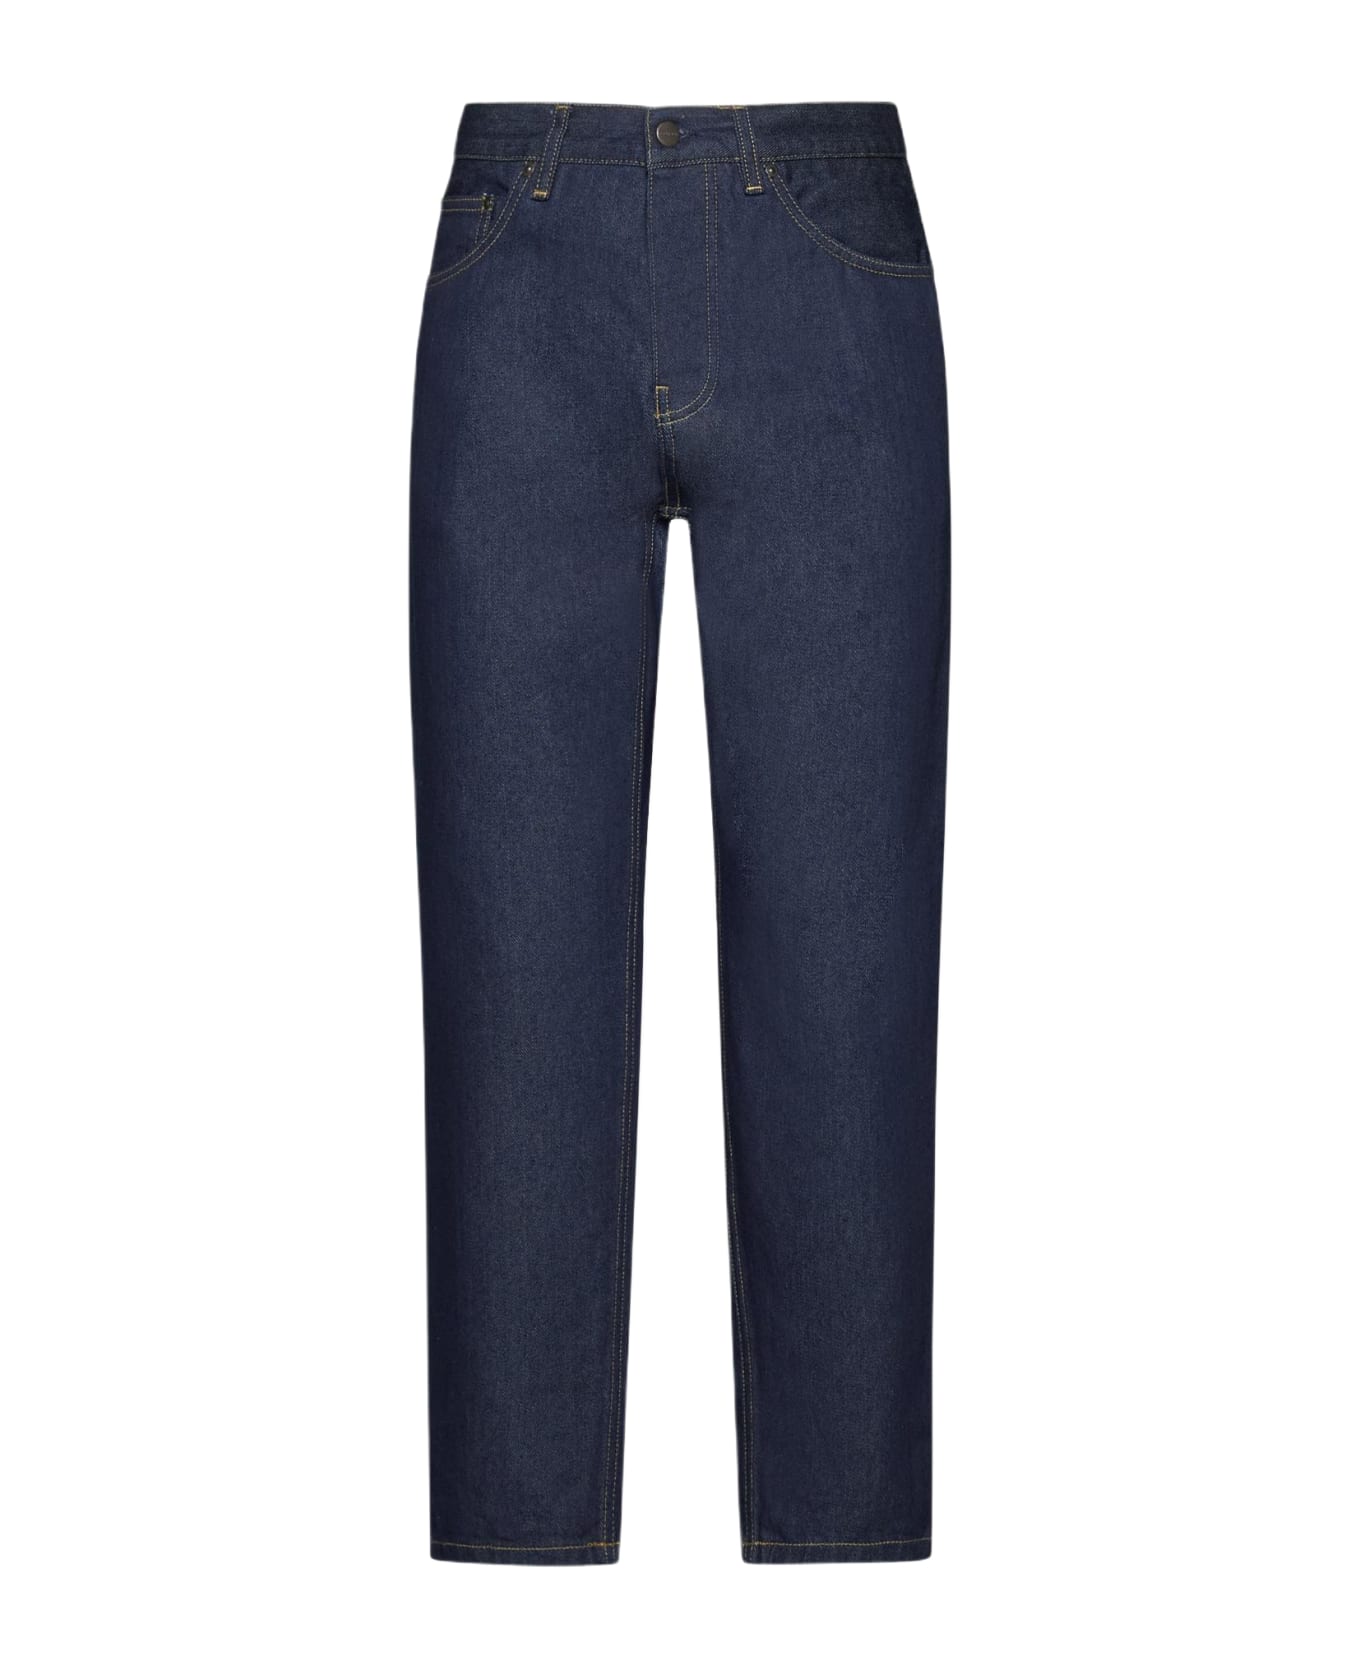 Carhartt Newel Jeans - BLUE